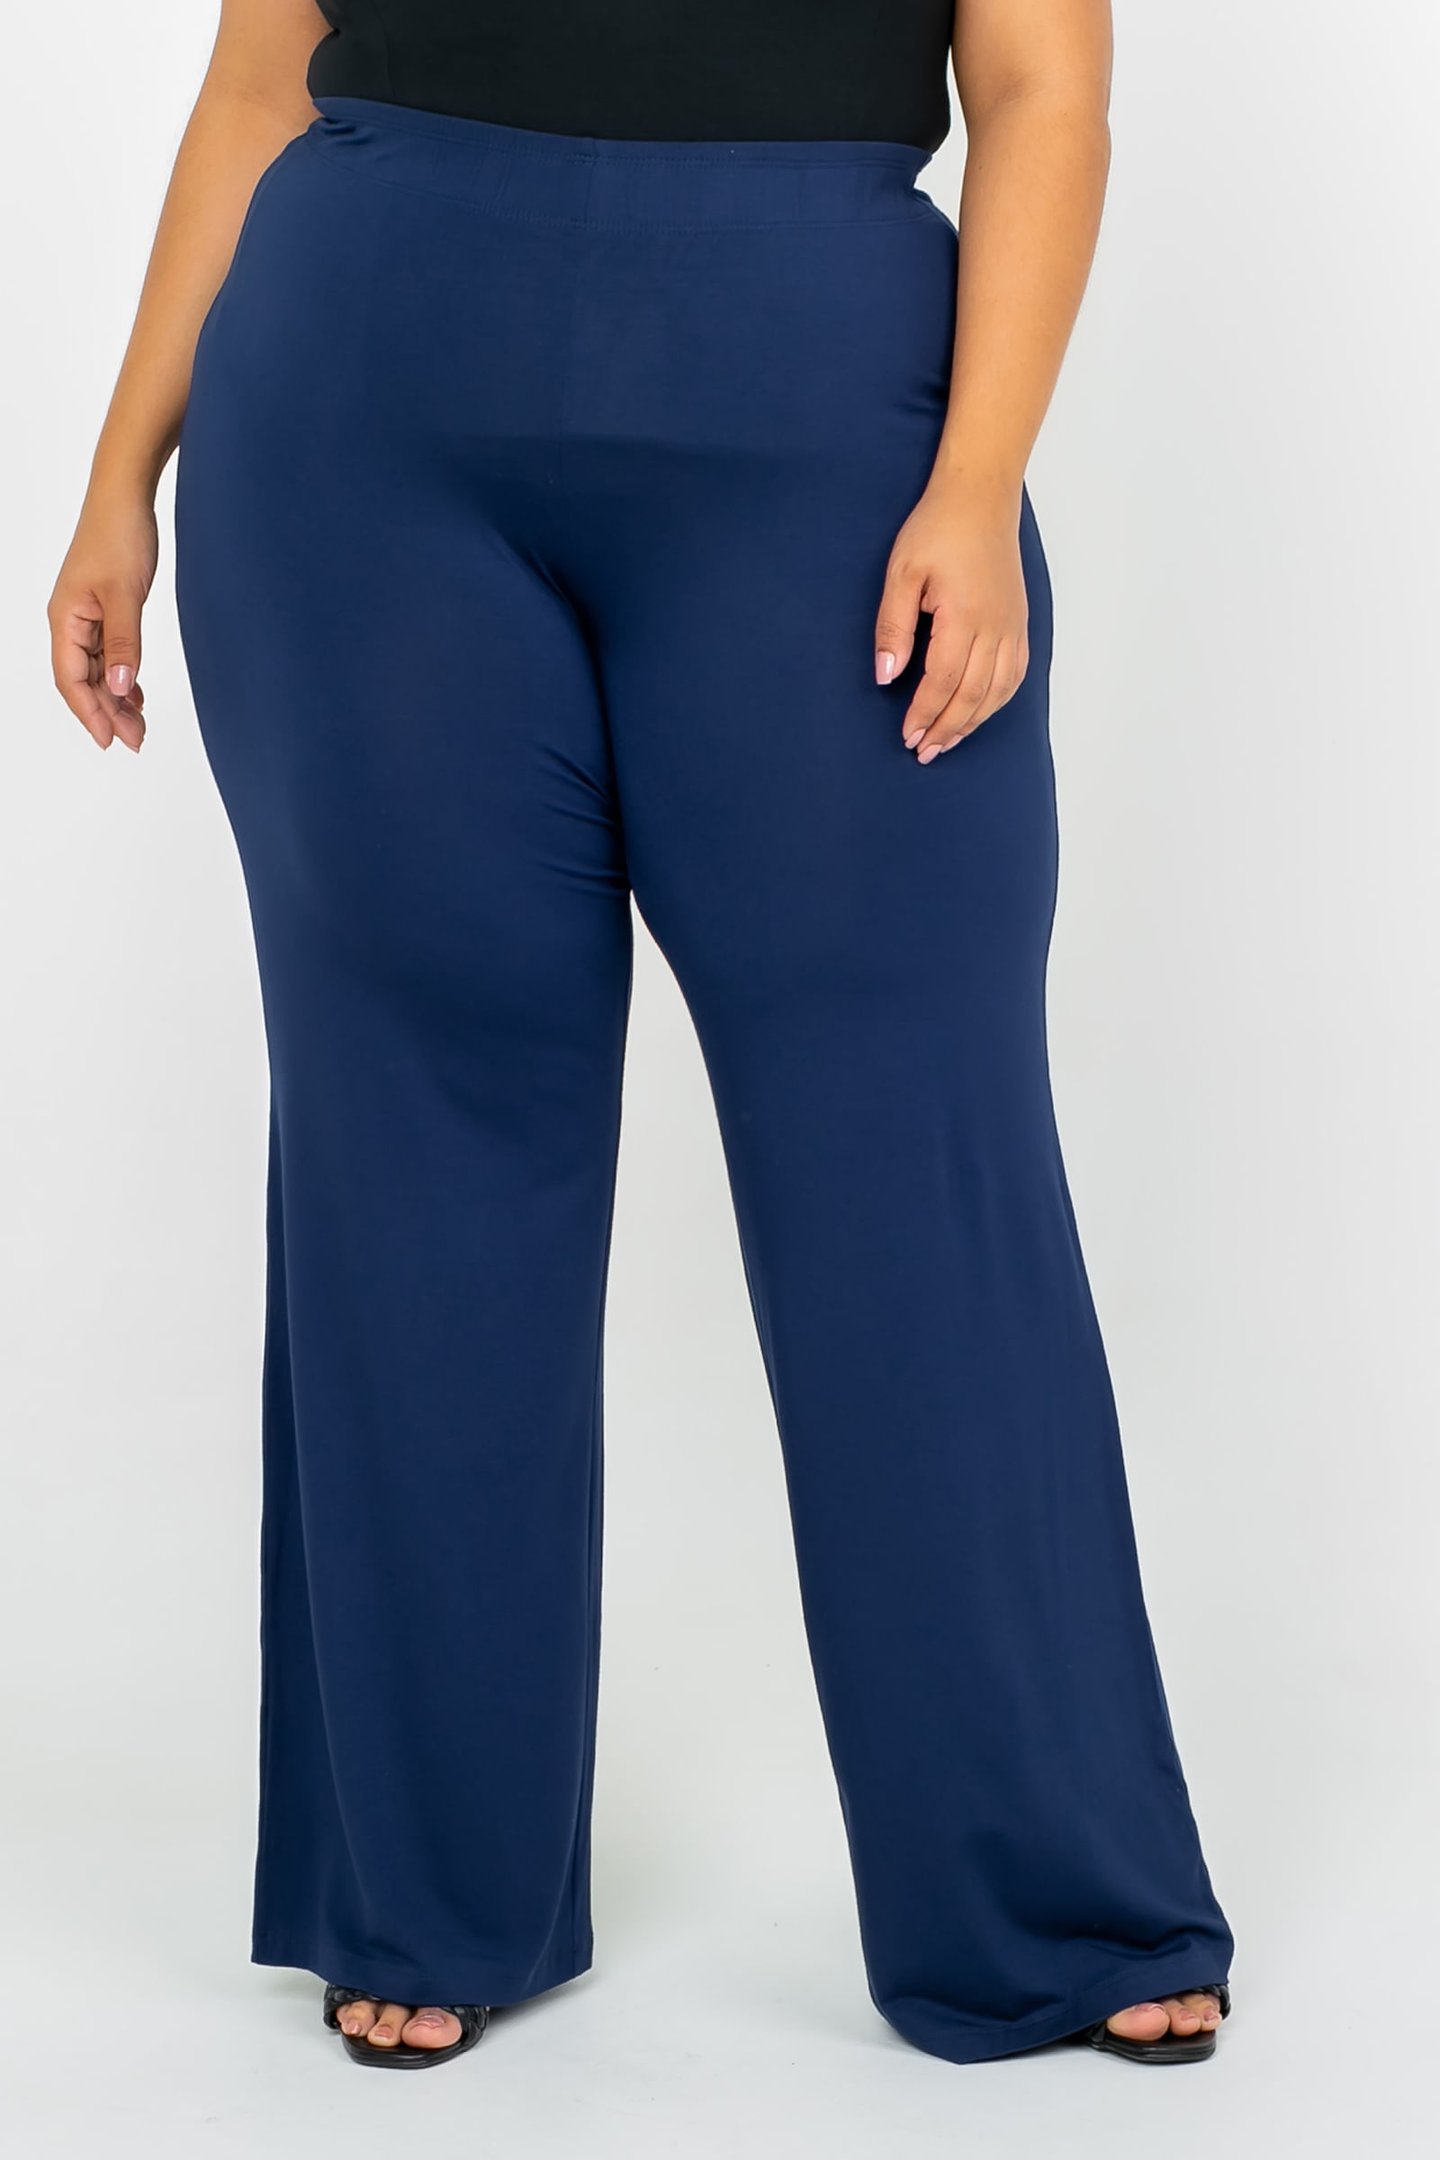 Calça pantalona plus size azul marinho